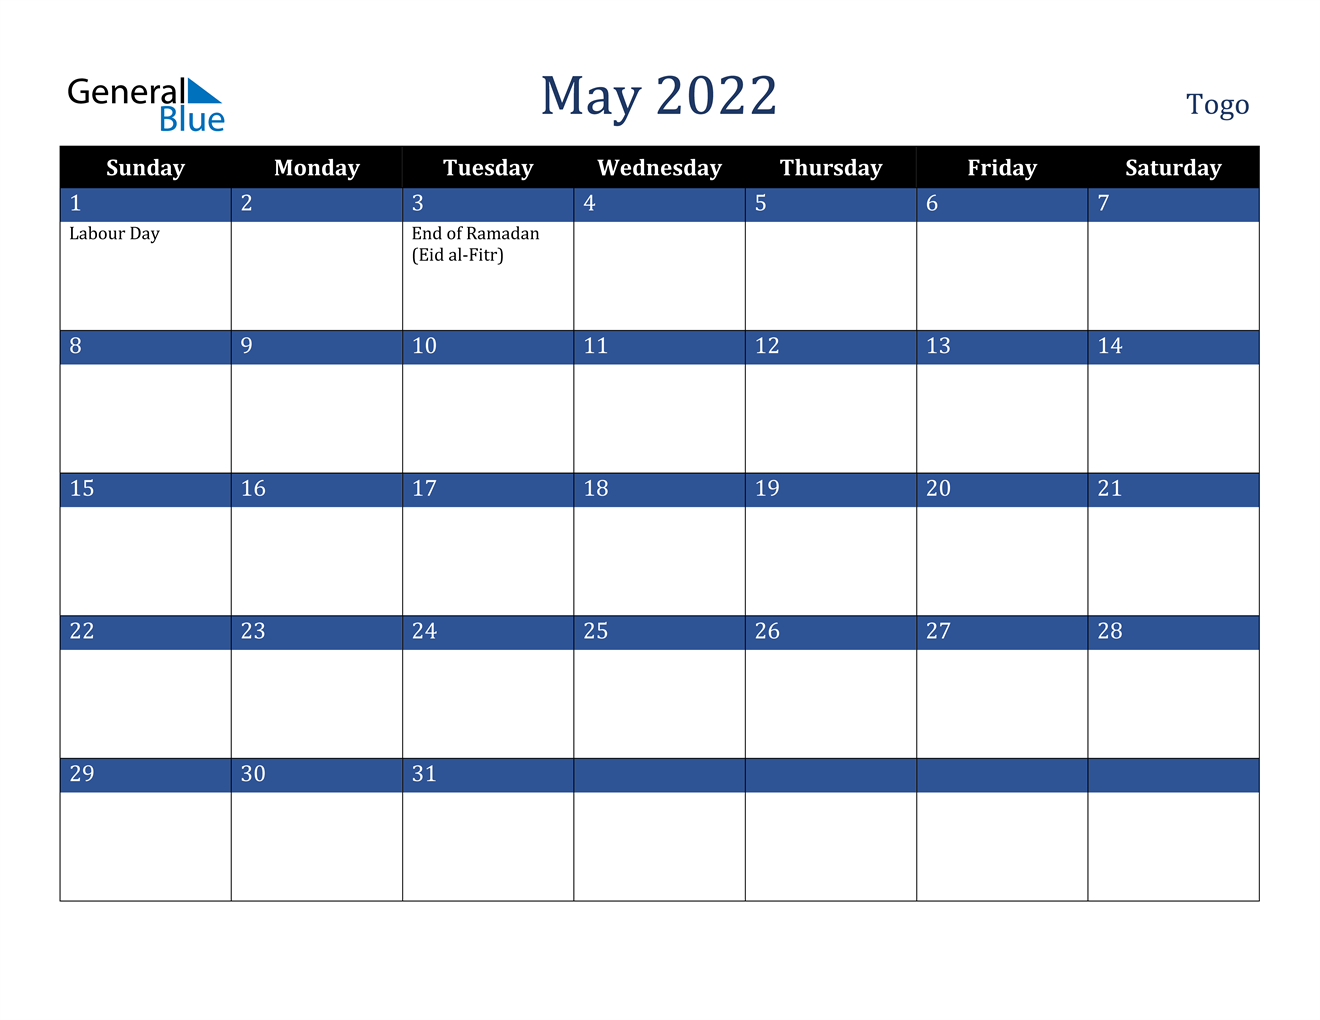 May 2022 Calendar - Togo